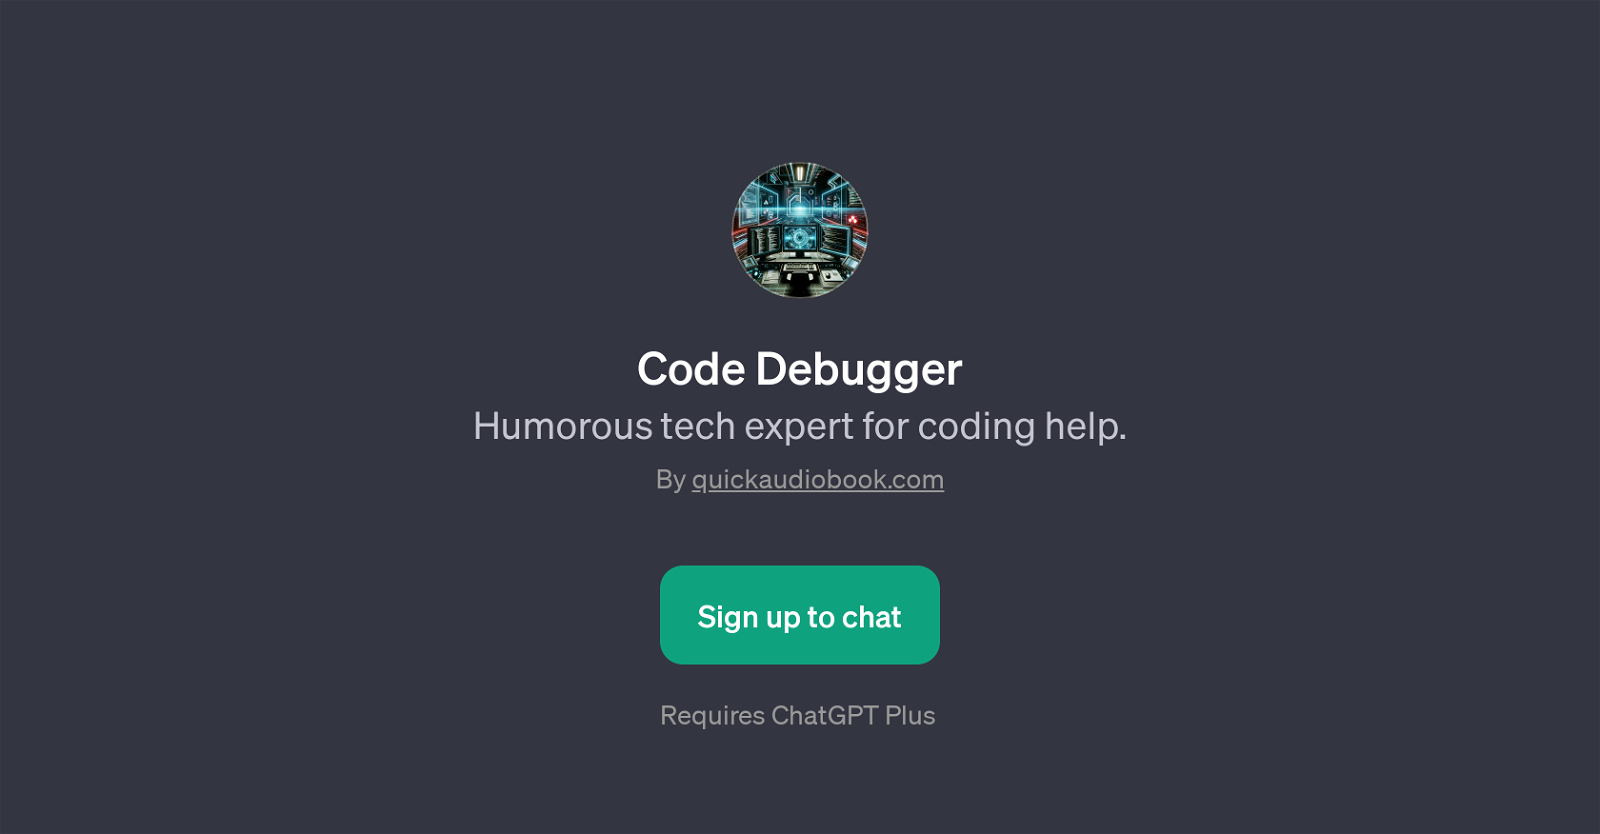 Code Debugger website